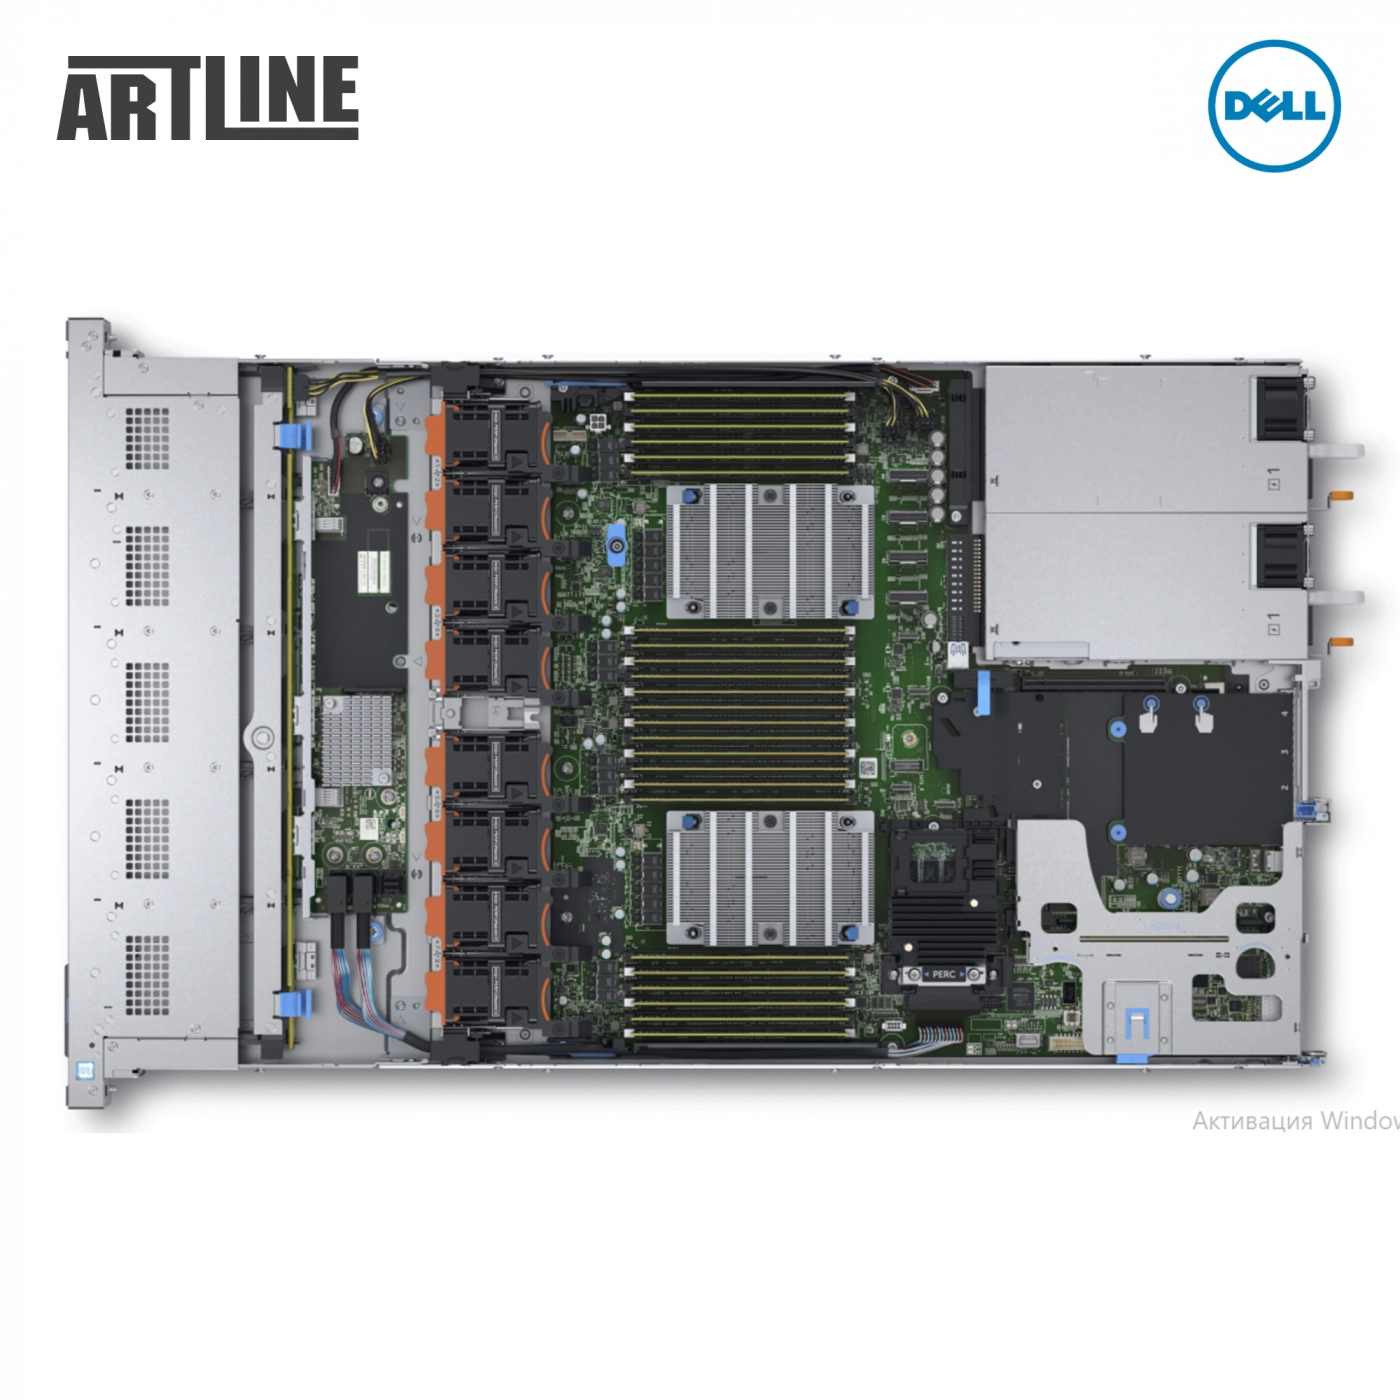 Купить Сервер Dell PowerEdge R640 (R640v04) - фото 4